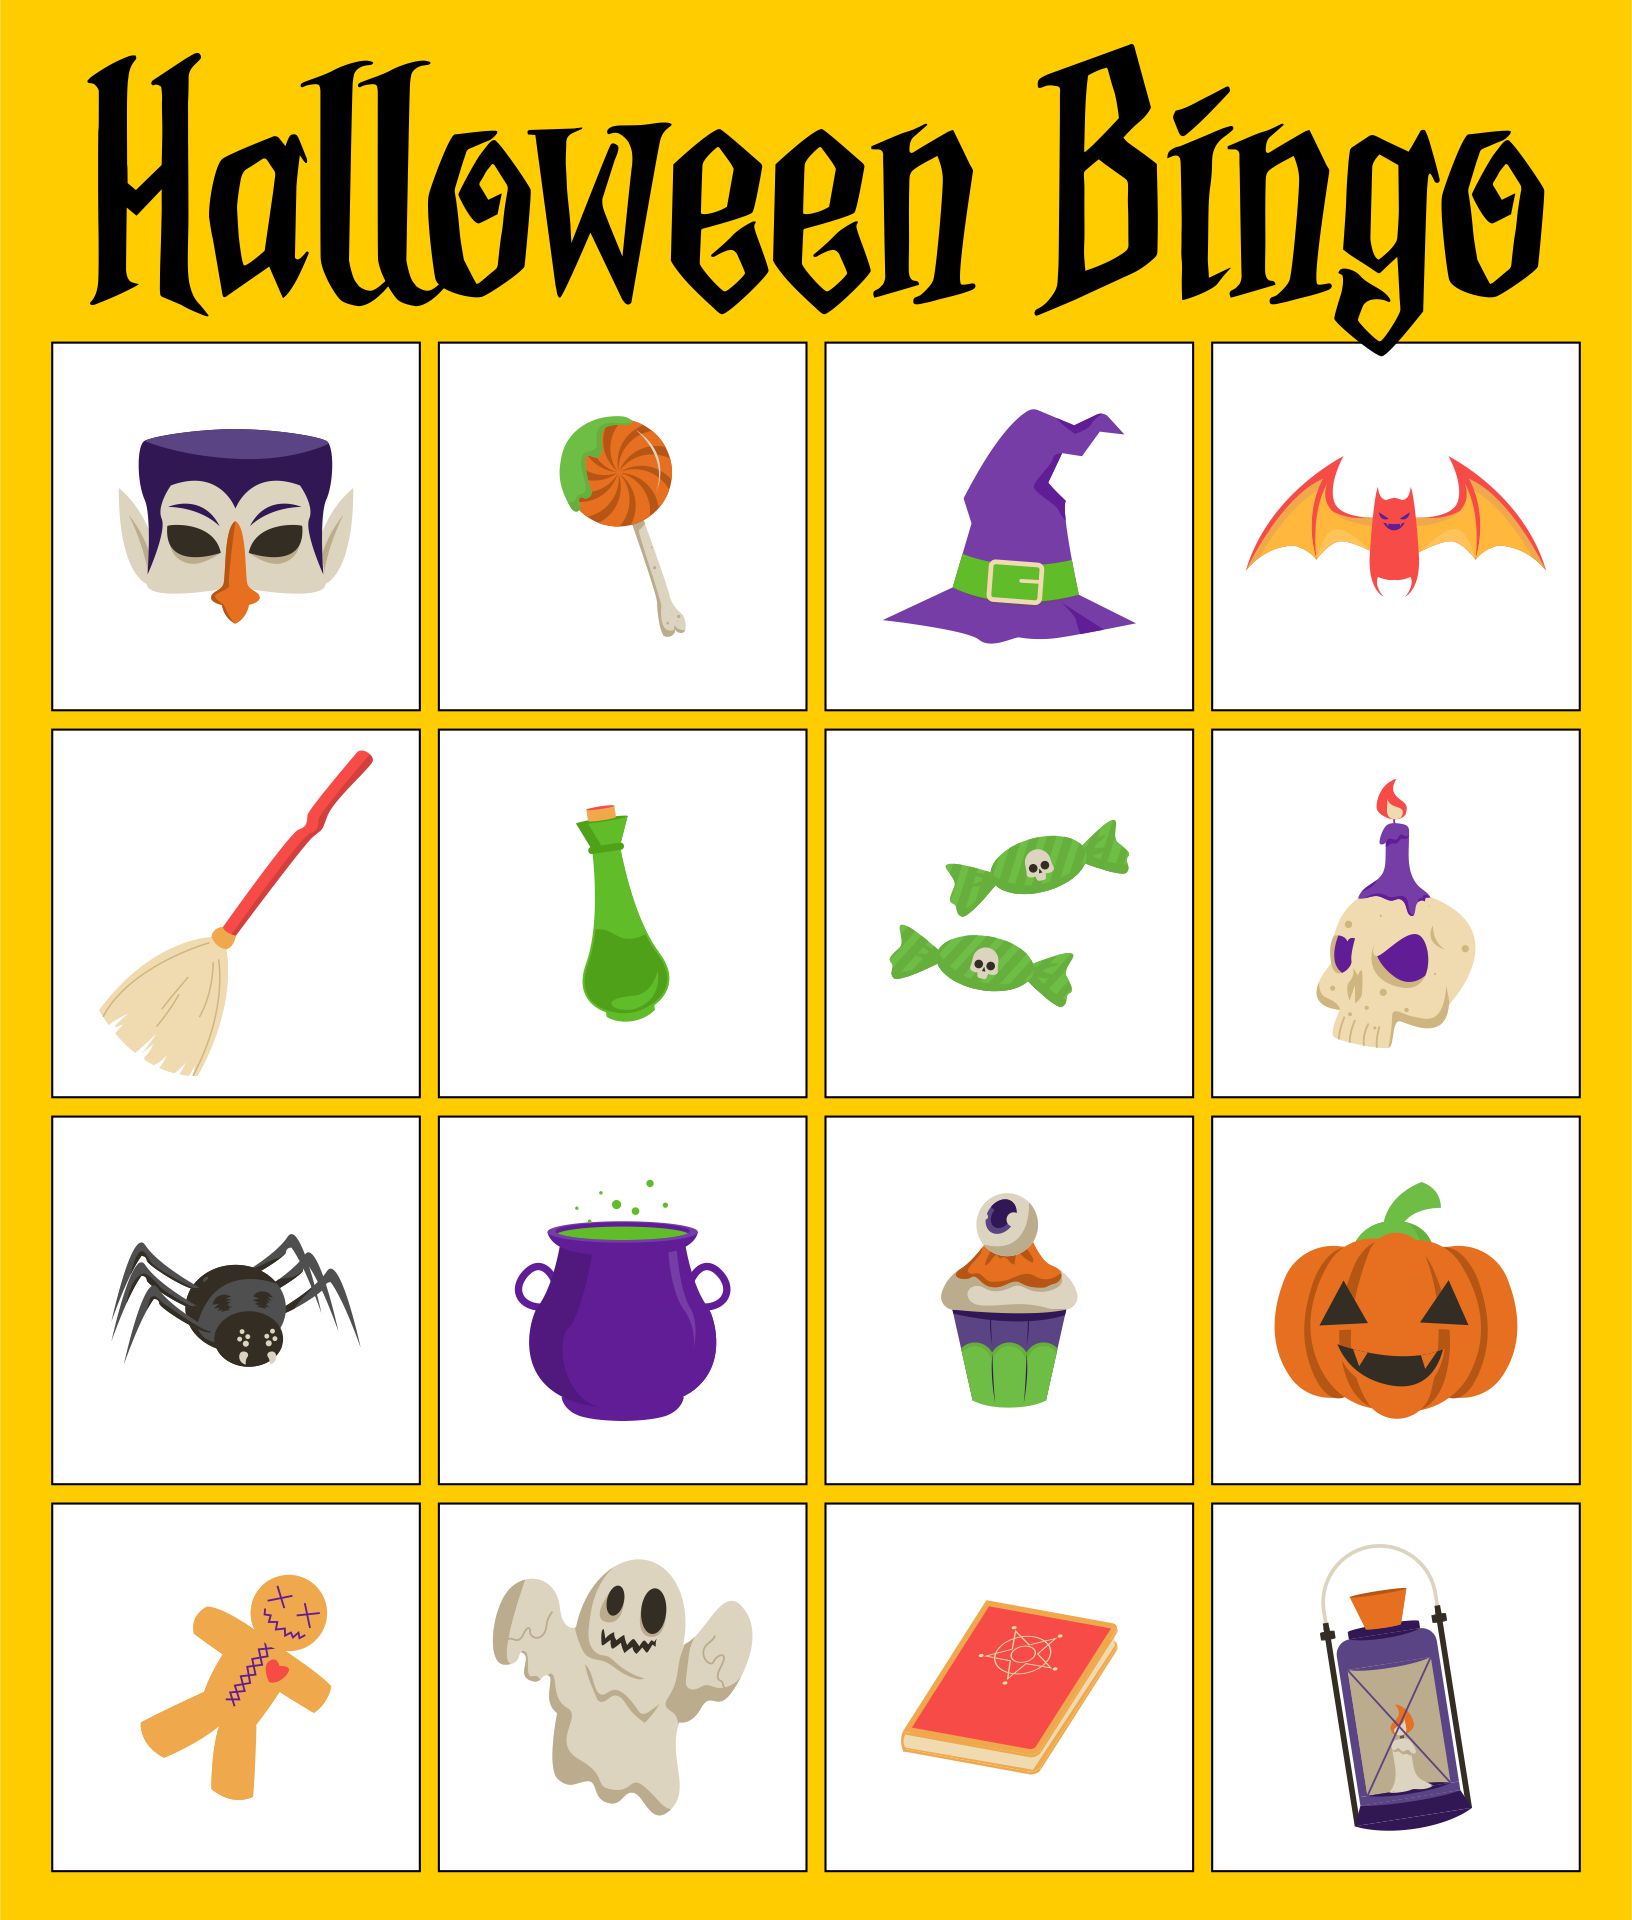 how-do-you-play-halloween-bingo-gail-s-blog